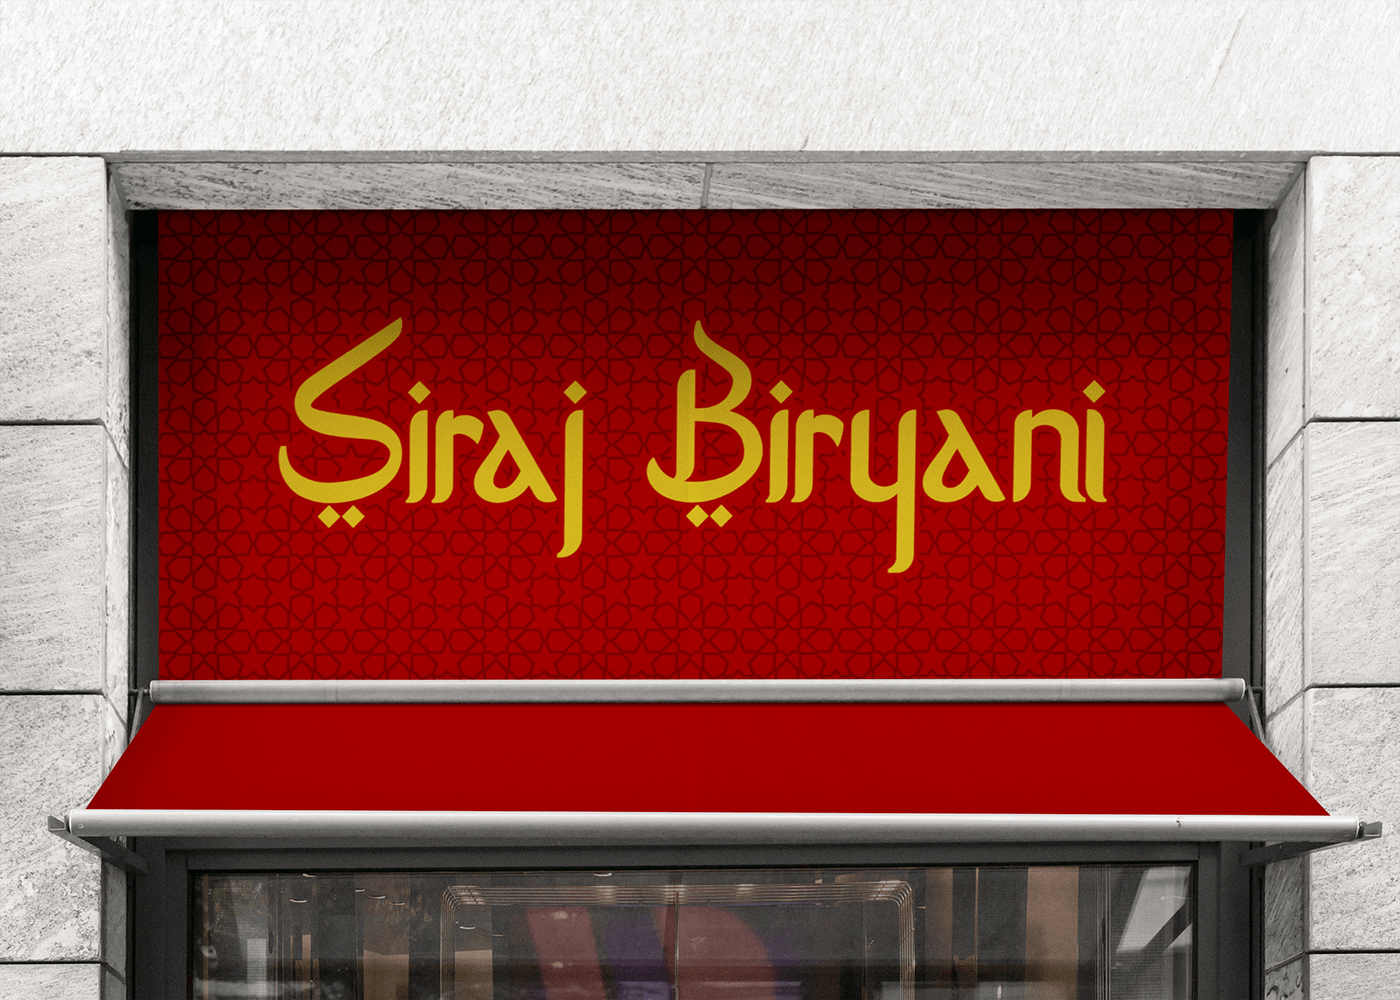 restaurant arabic Food  asian Indian Restaurant Logo Design Identity Design food branding indian food India